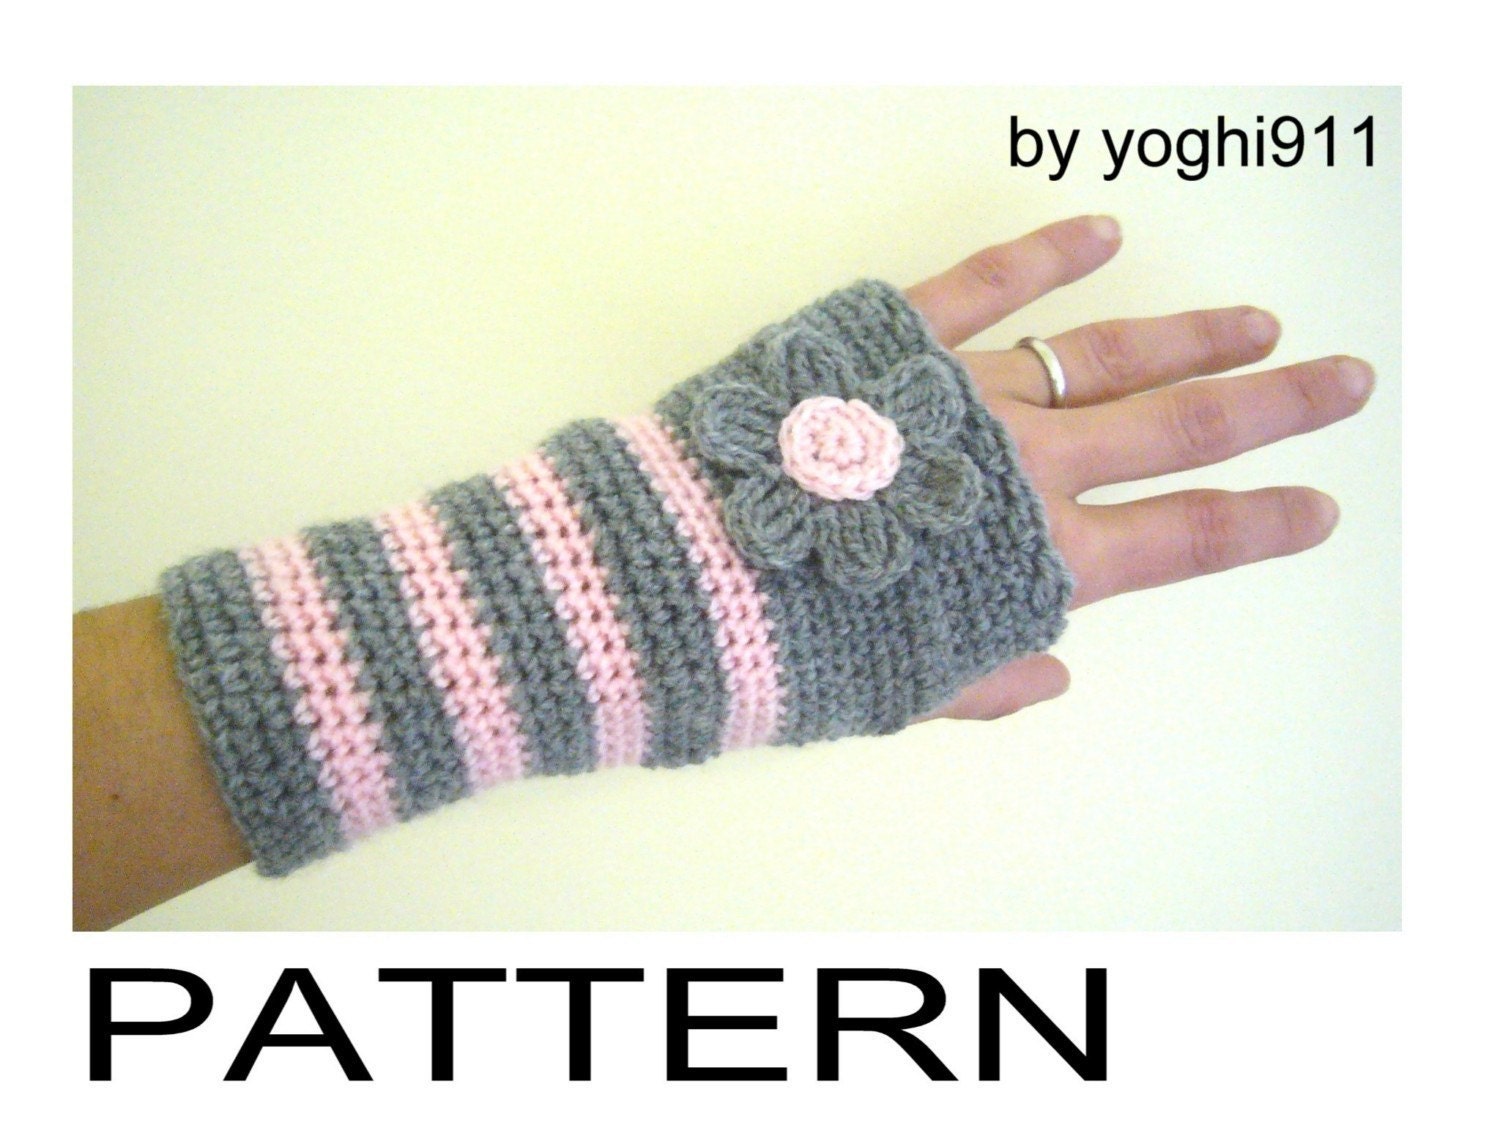 pattern crochet gloves fingerless shell warmers mittens PDF yoghi911 by gloves Pattern Hand Fingerless